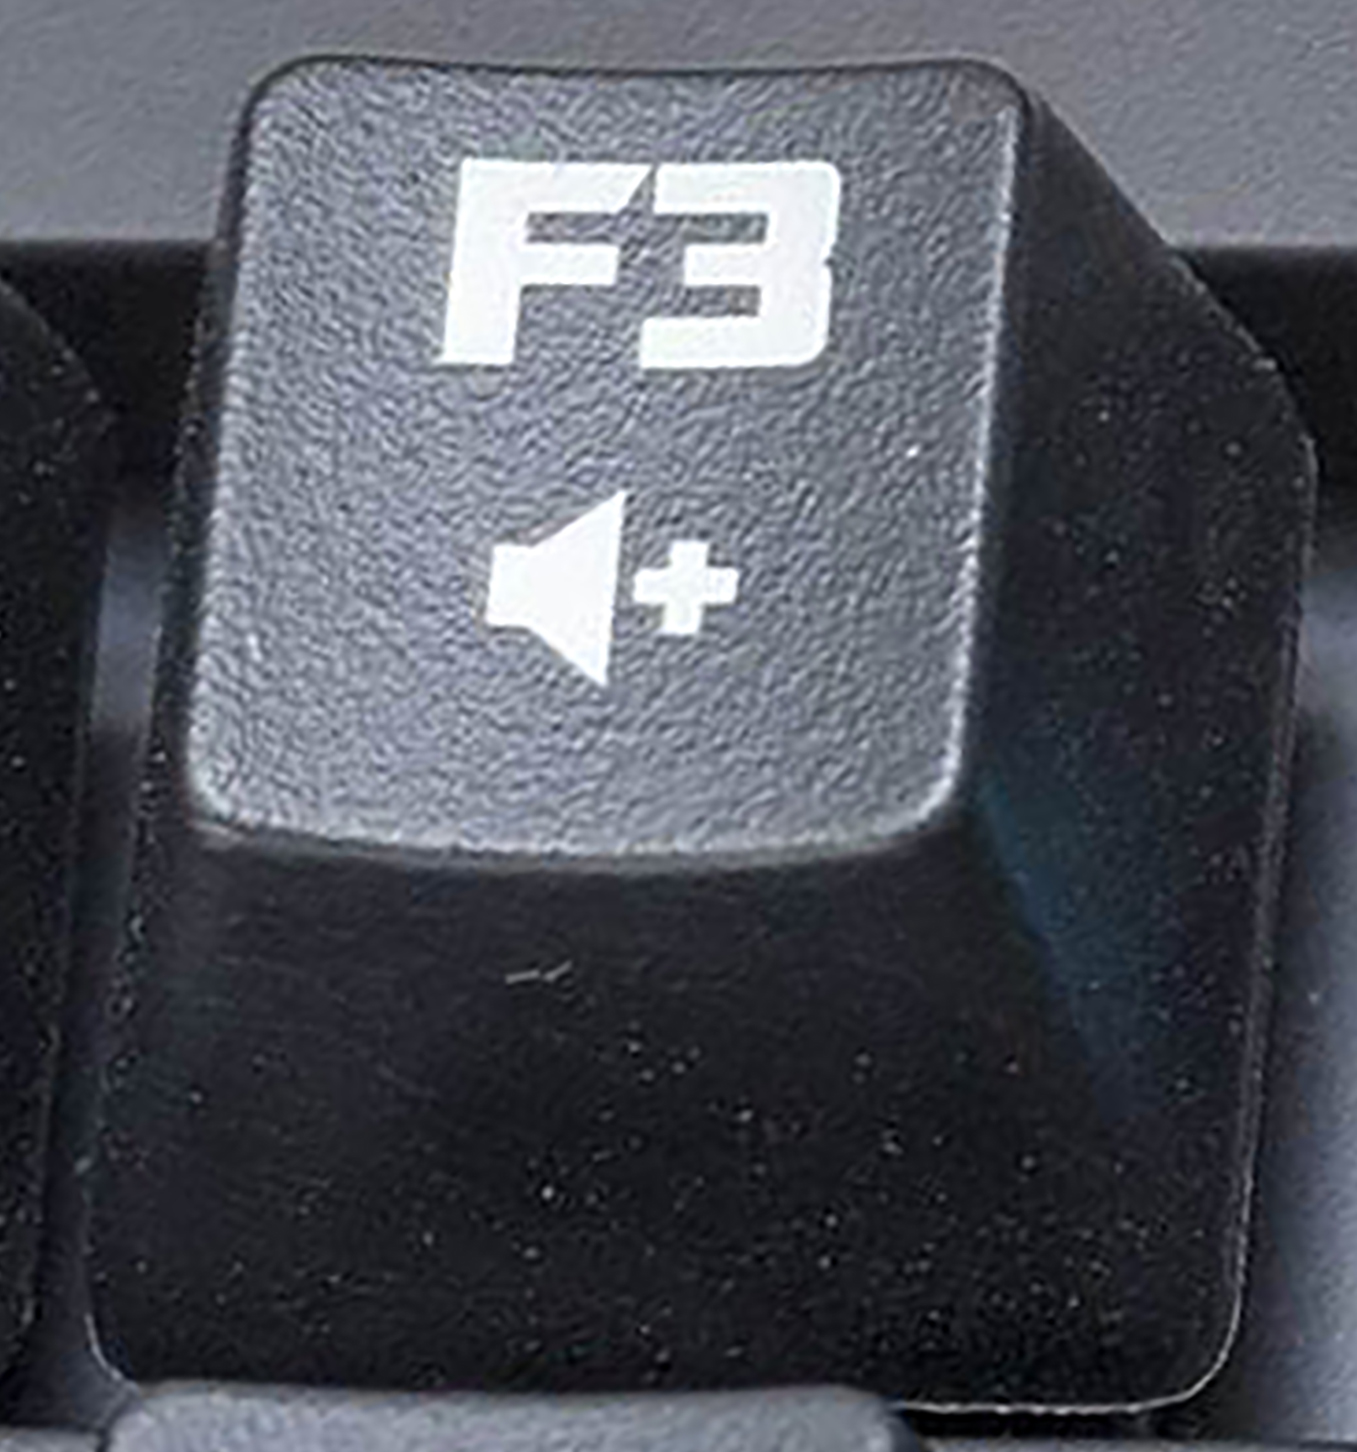 F3(鍵盤功能鍵)